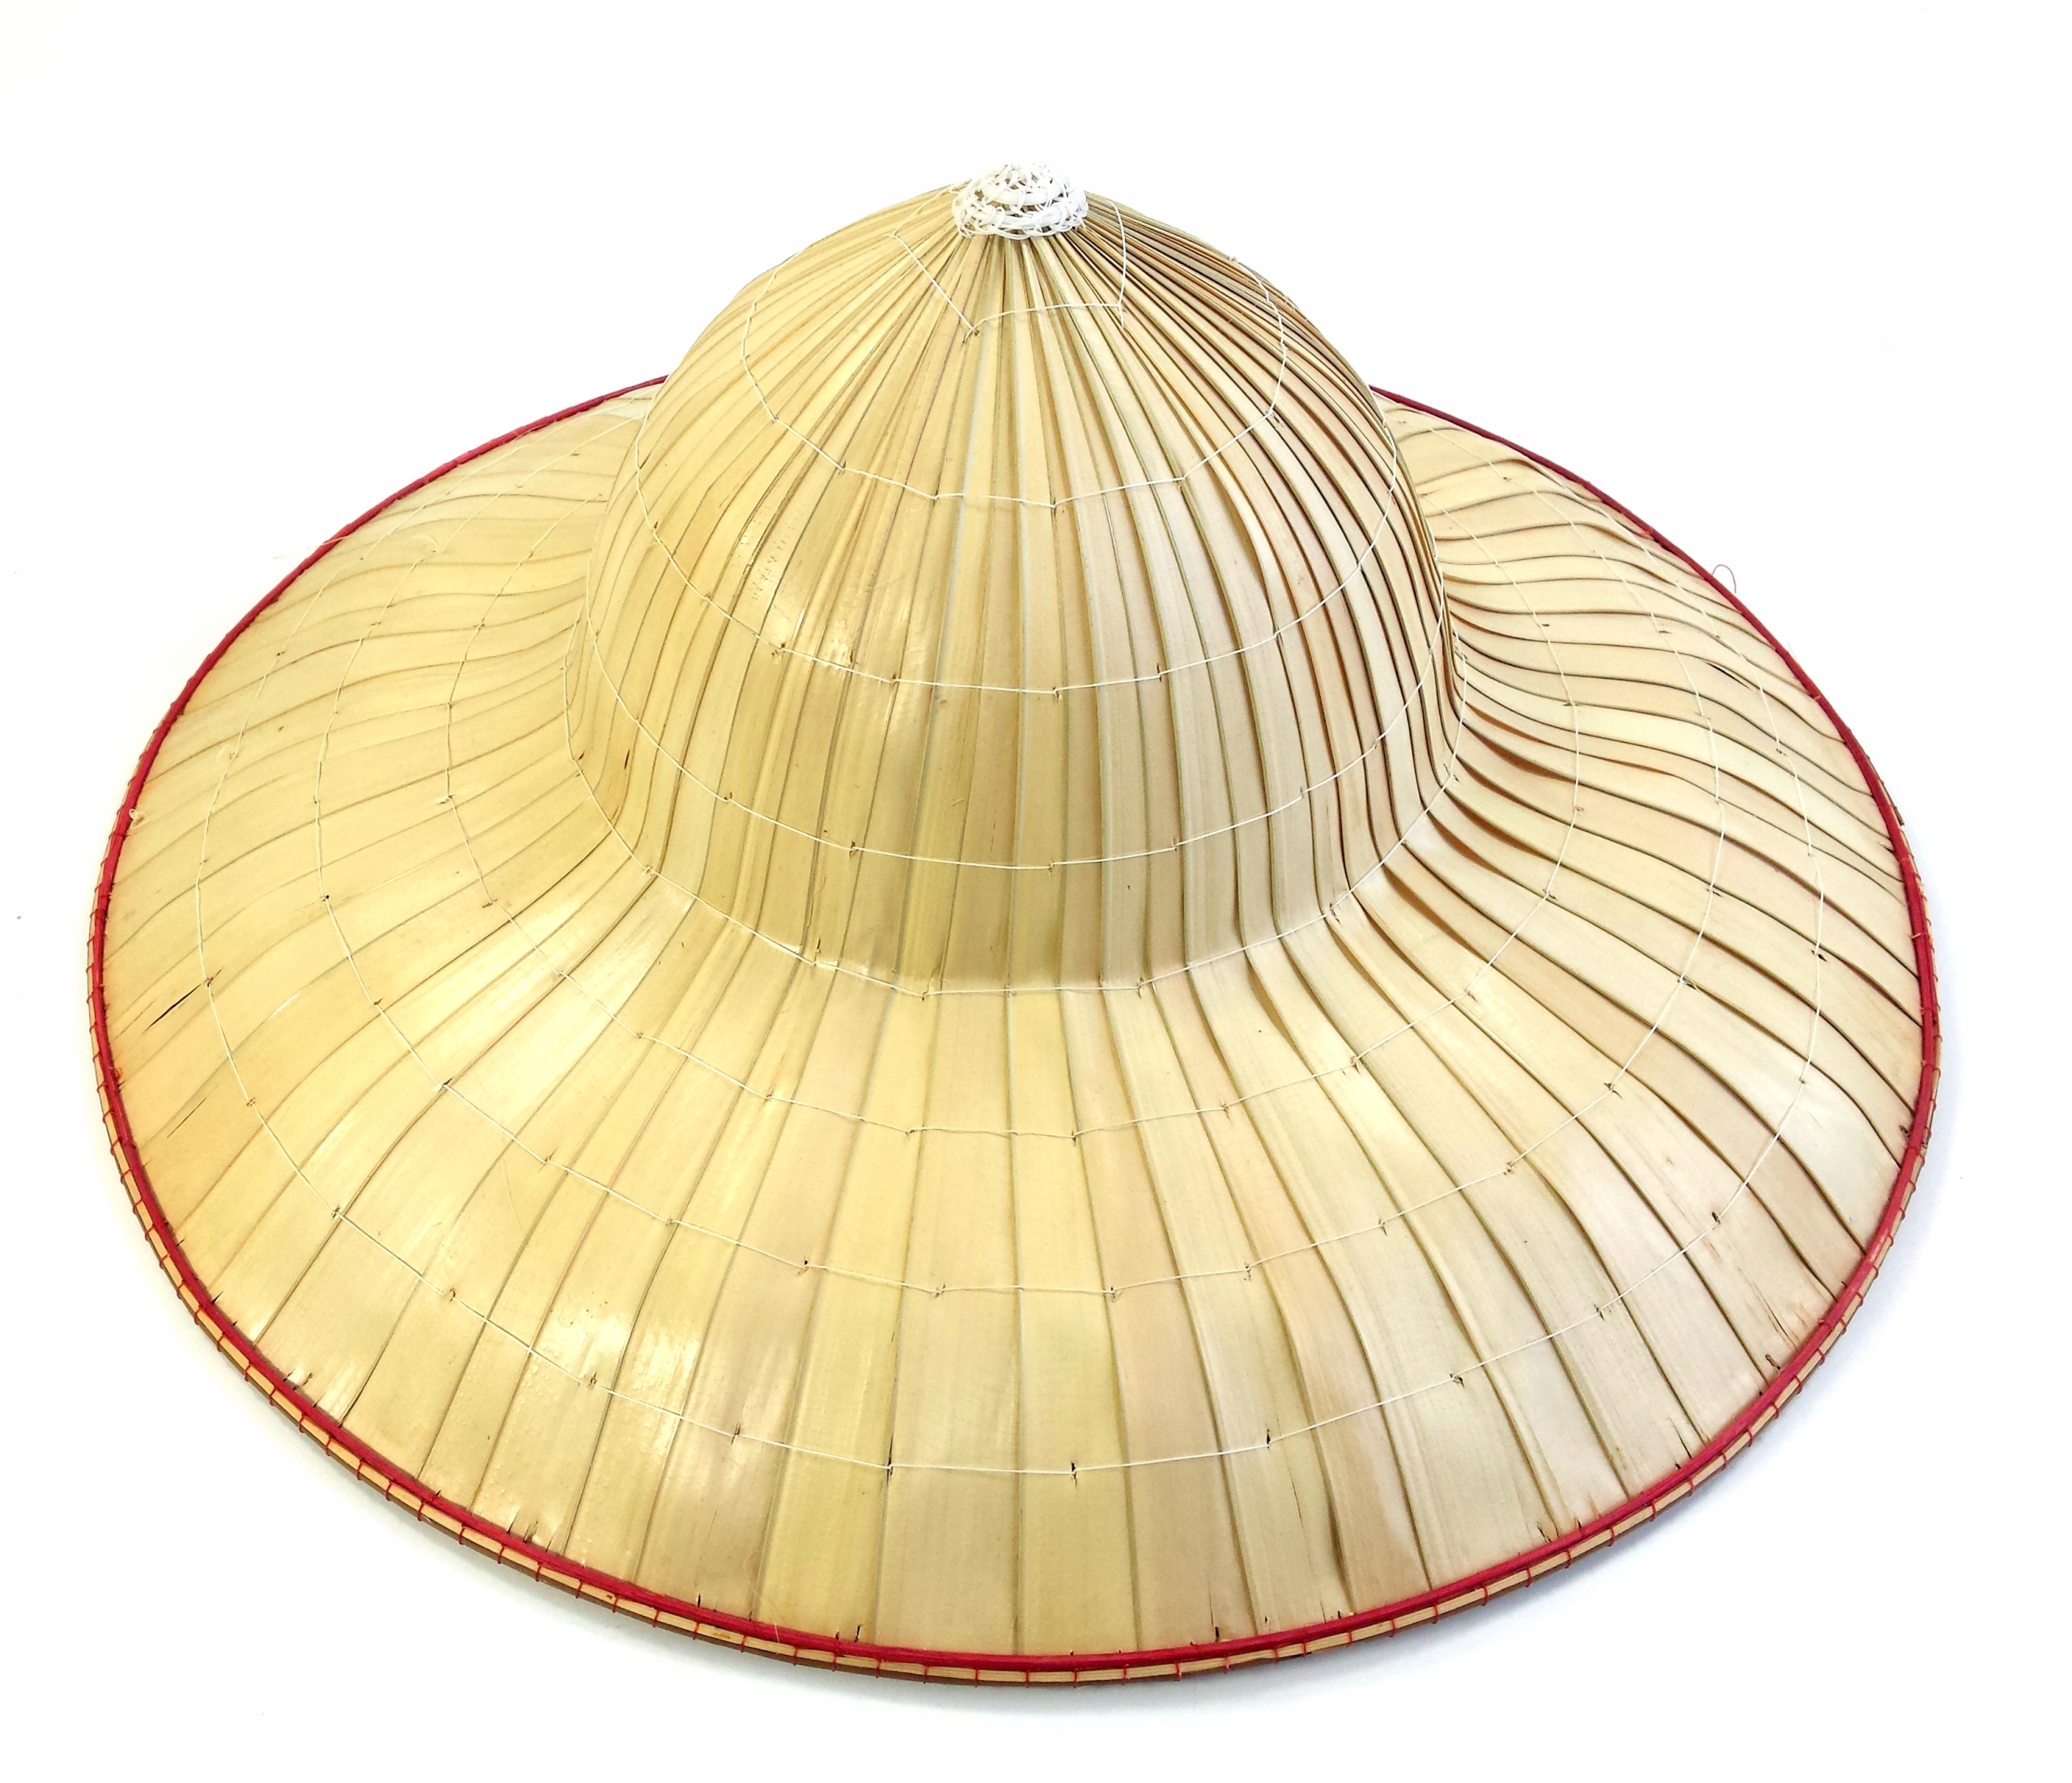 Bamboo hat. Японская шляпа амигаса. Шляпа амигаса бамбуковая. Шляпа амигаса Вьетнам. Амигаса головной убор самурая.